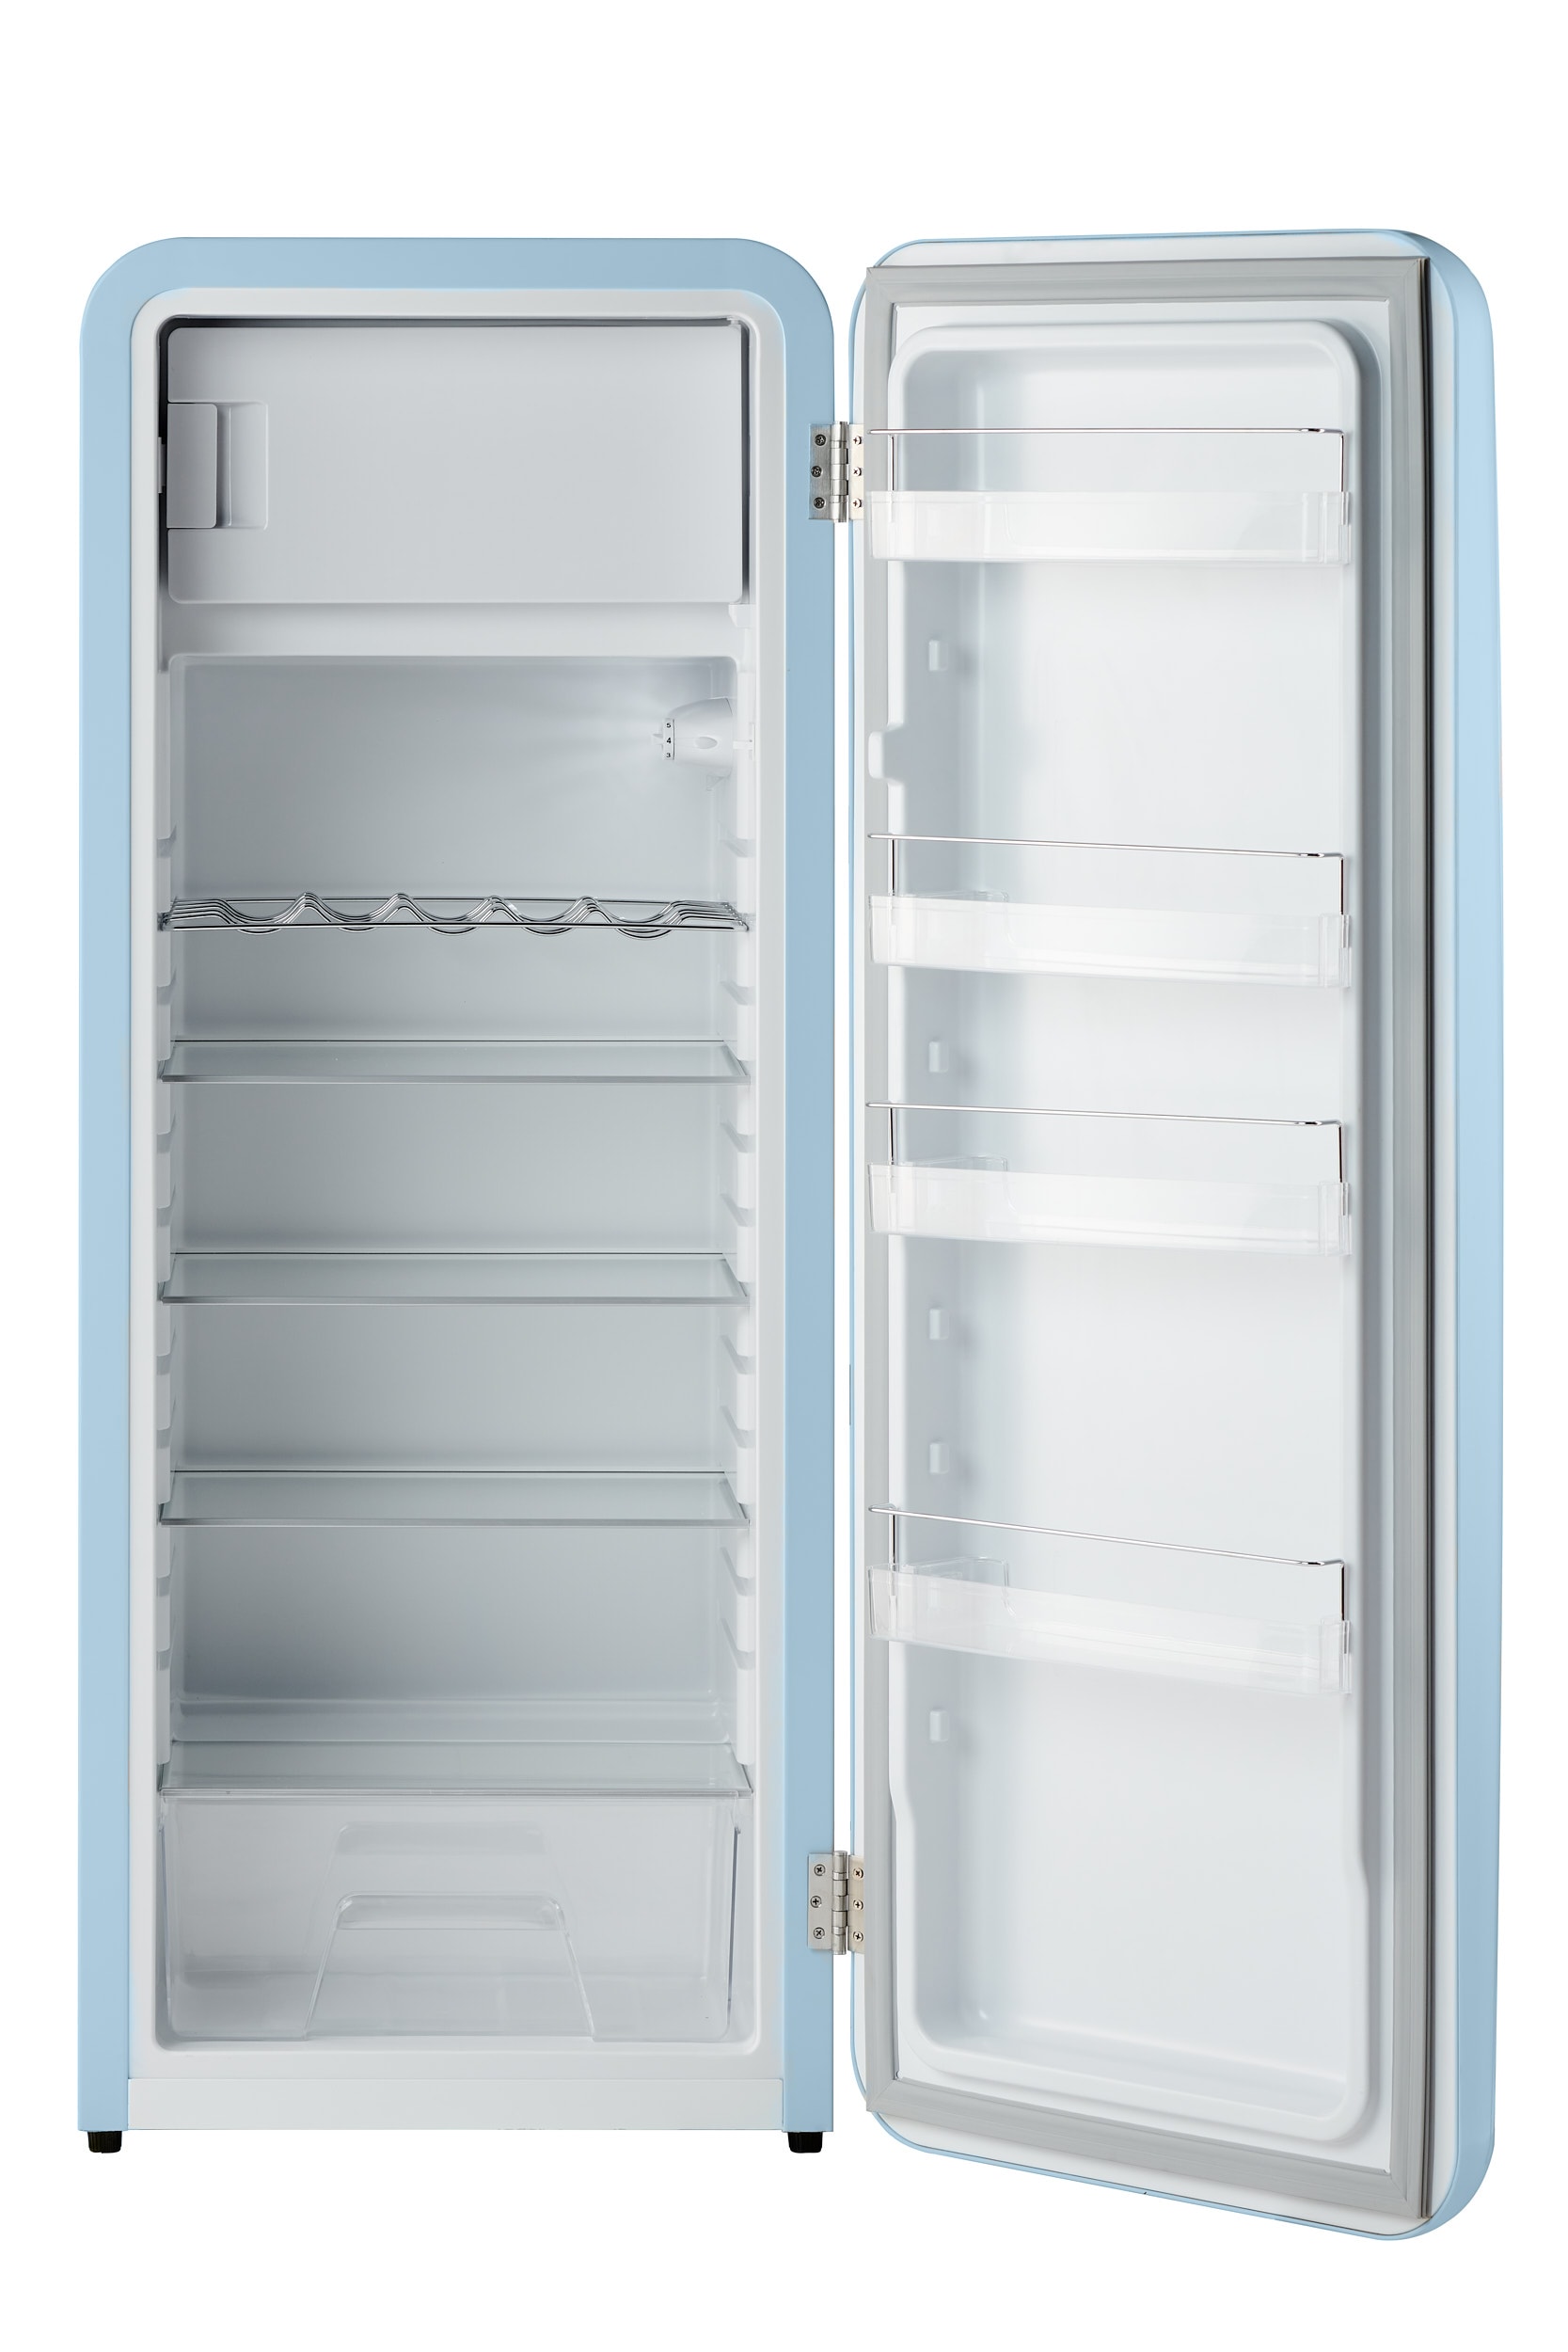 Galanz 3.1-cu ft retro dual door refrigerator 3.1-cu ft Standard-depth  Freestanding Mini Fridge Freezer Compartment (Bebop Blue) ENERGY STAR at